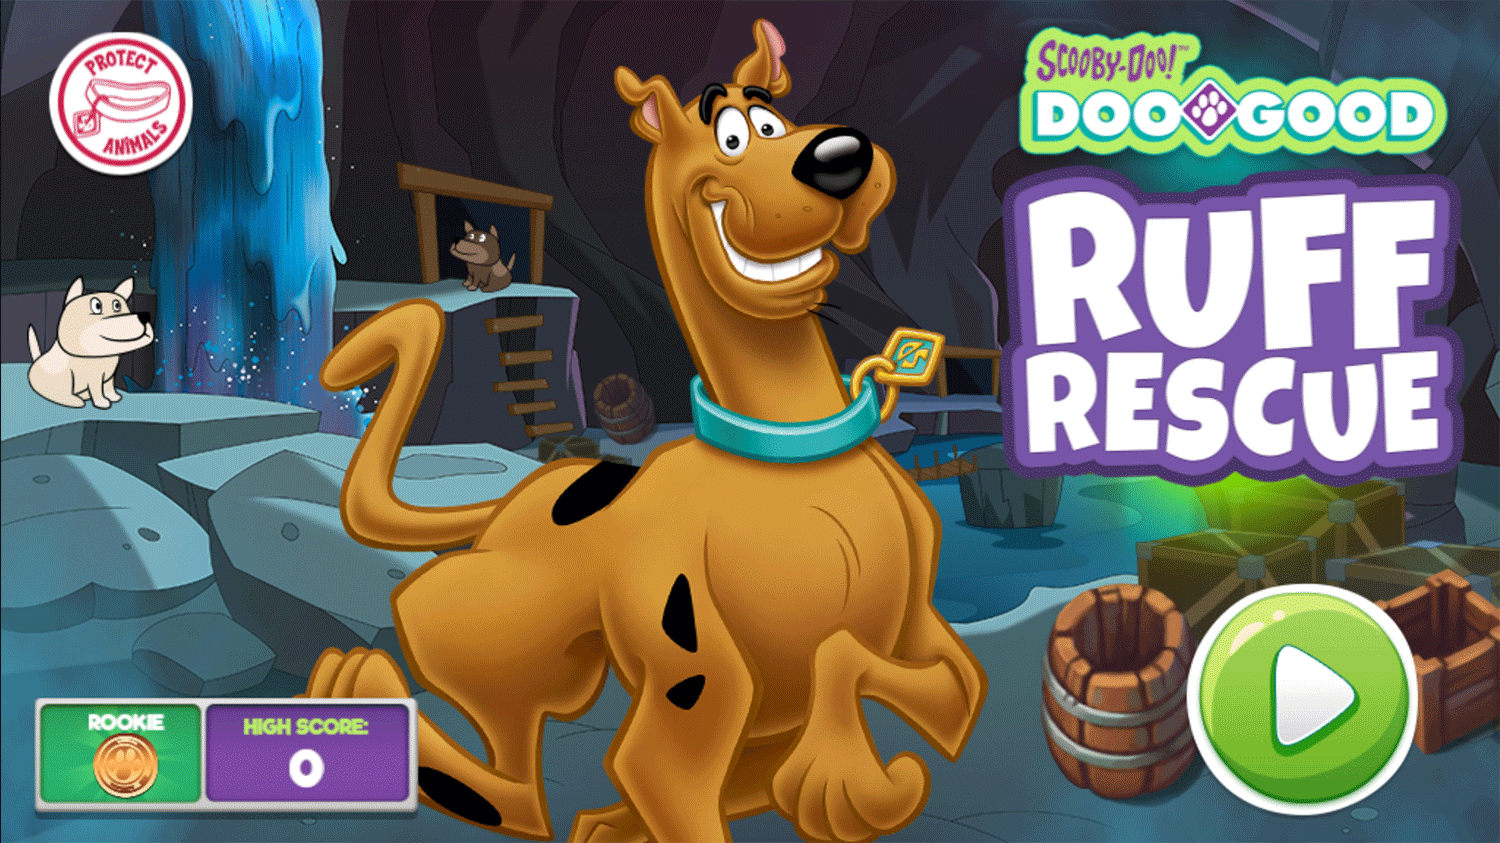 Scooby Doo Doo Good Ruff Rescue Welcome Screen Screenshot.